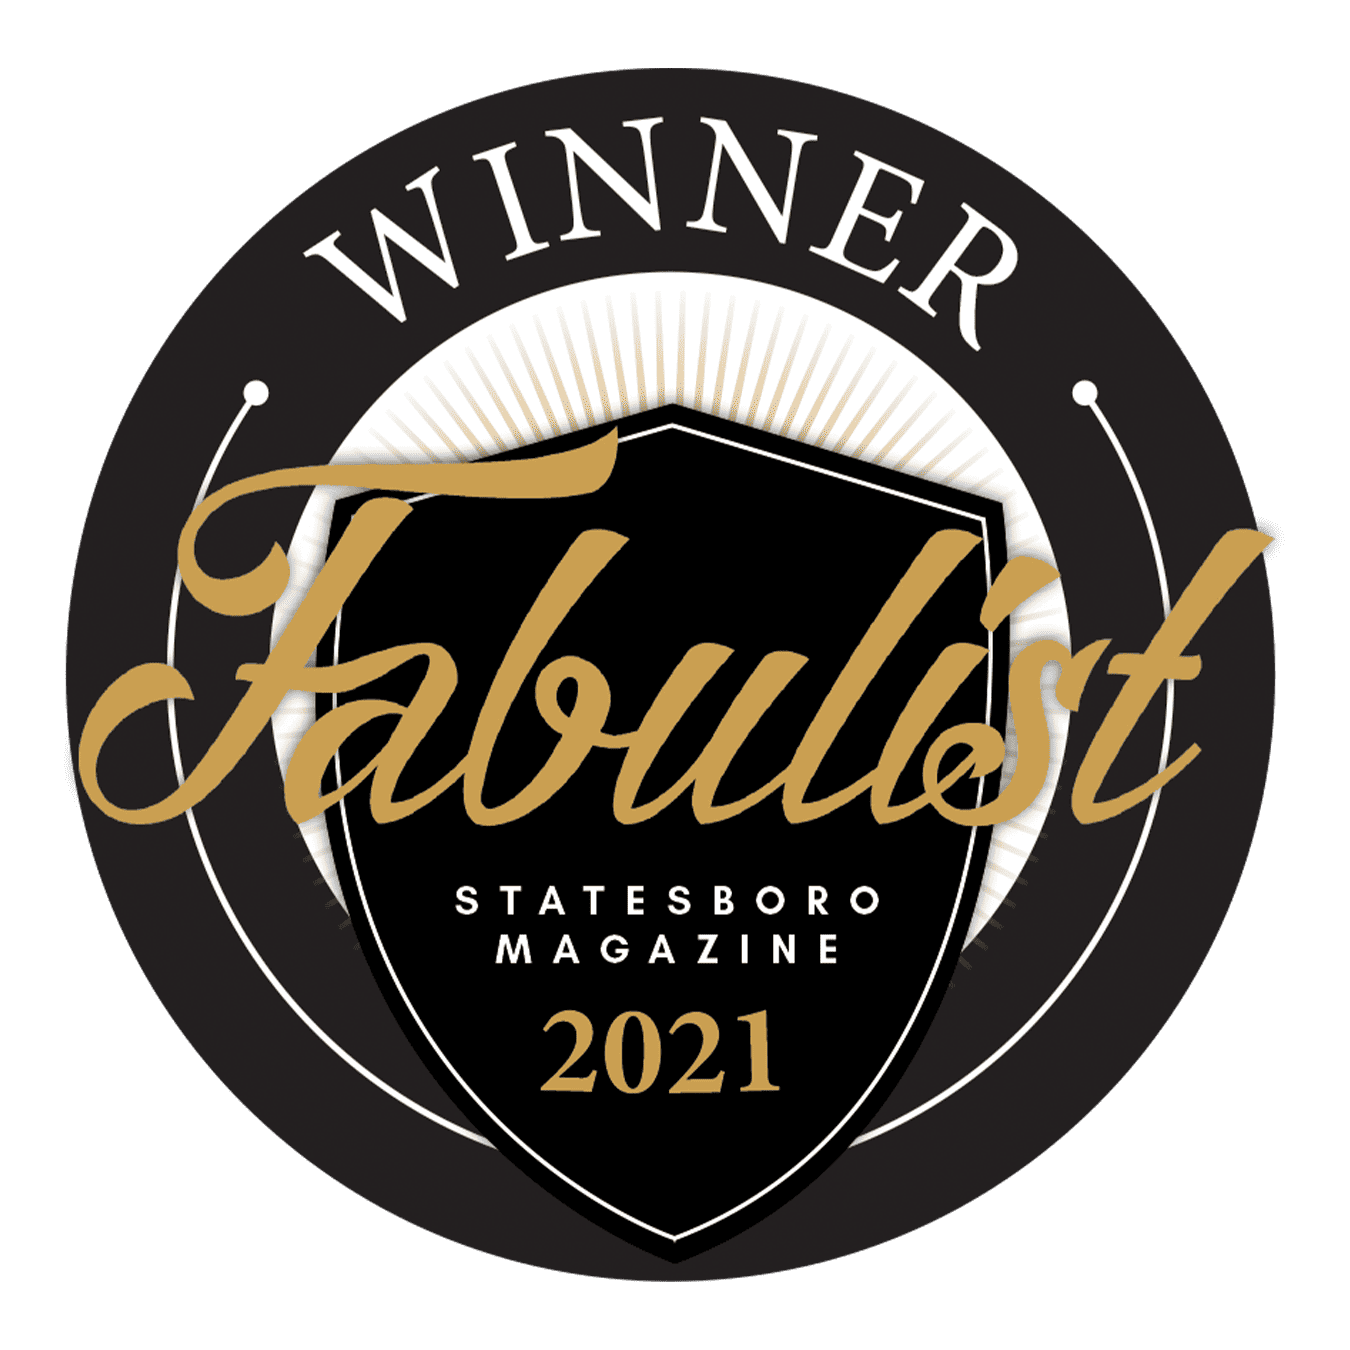 UP Market Media is the winning recipient of the 2021 Fabulist Statesboro Magazine award.